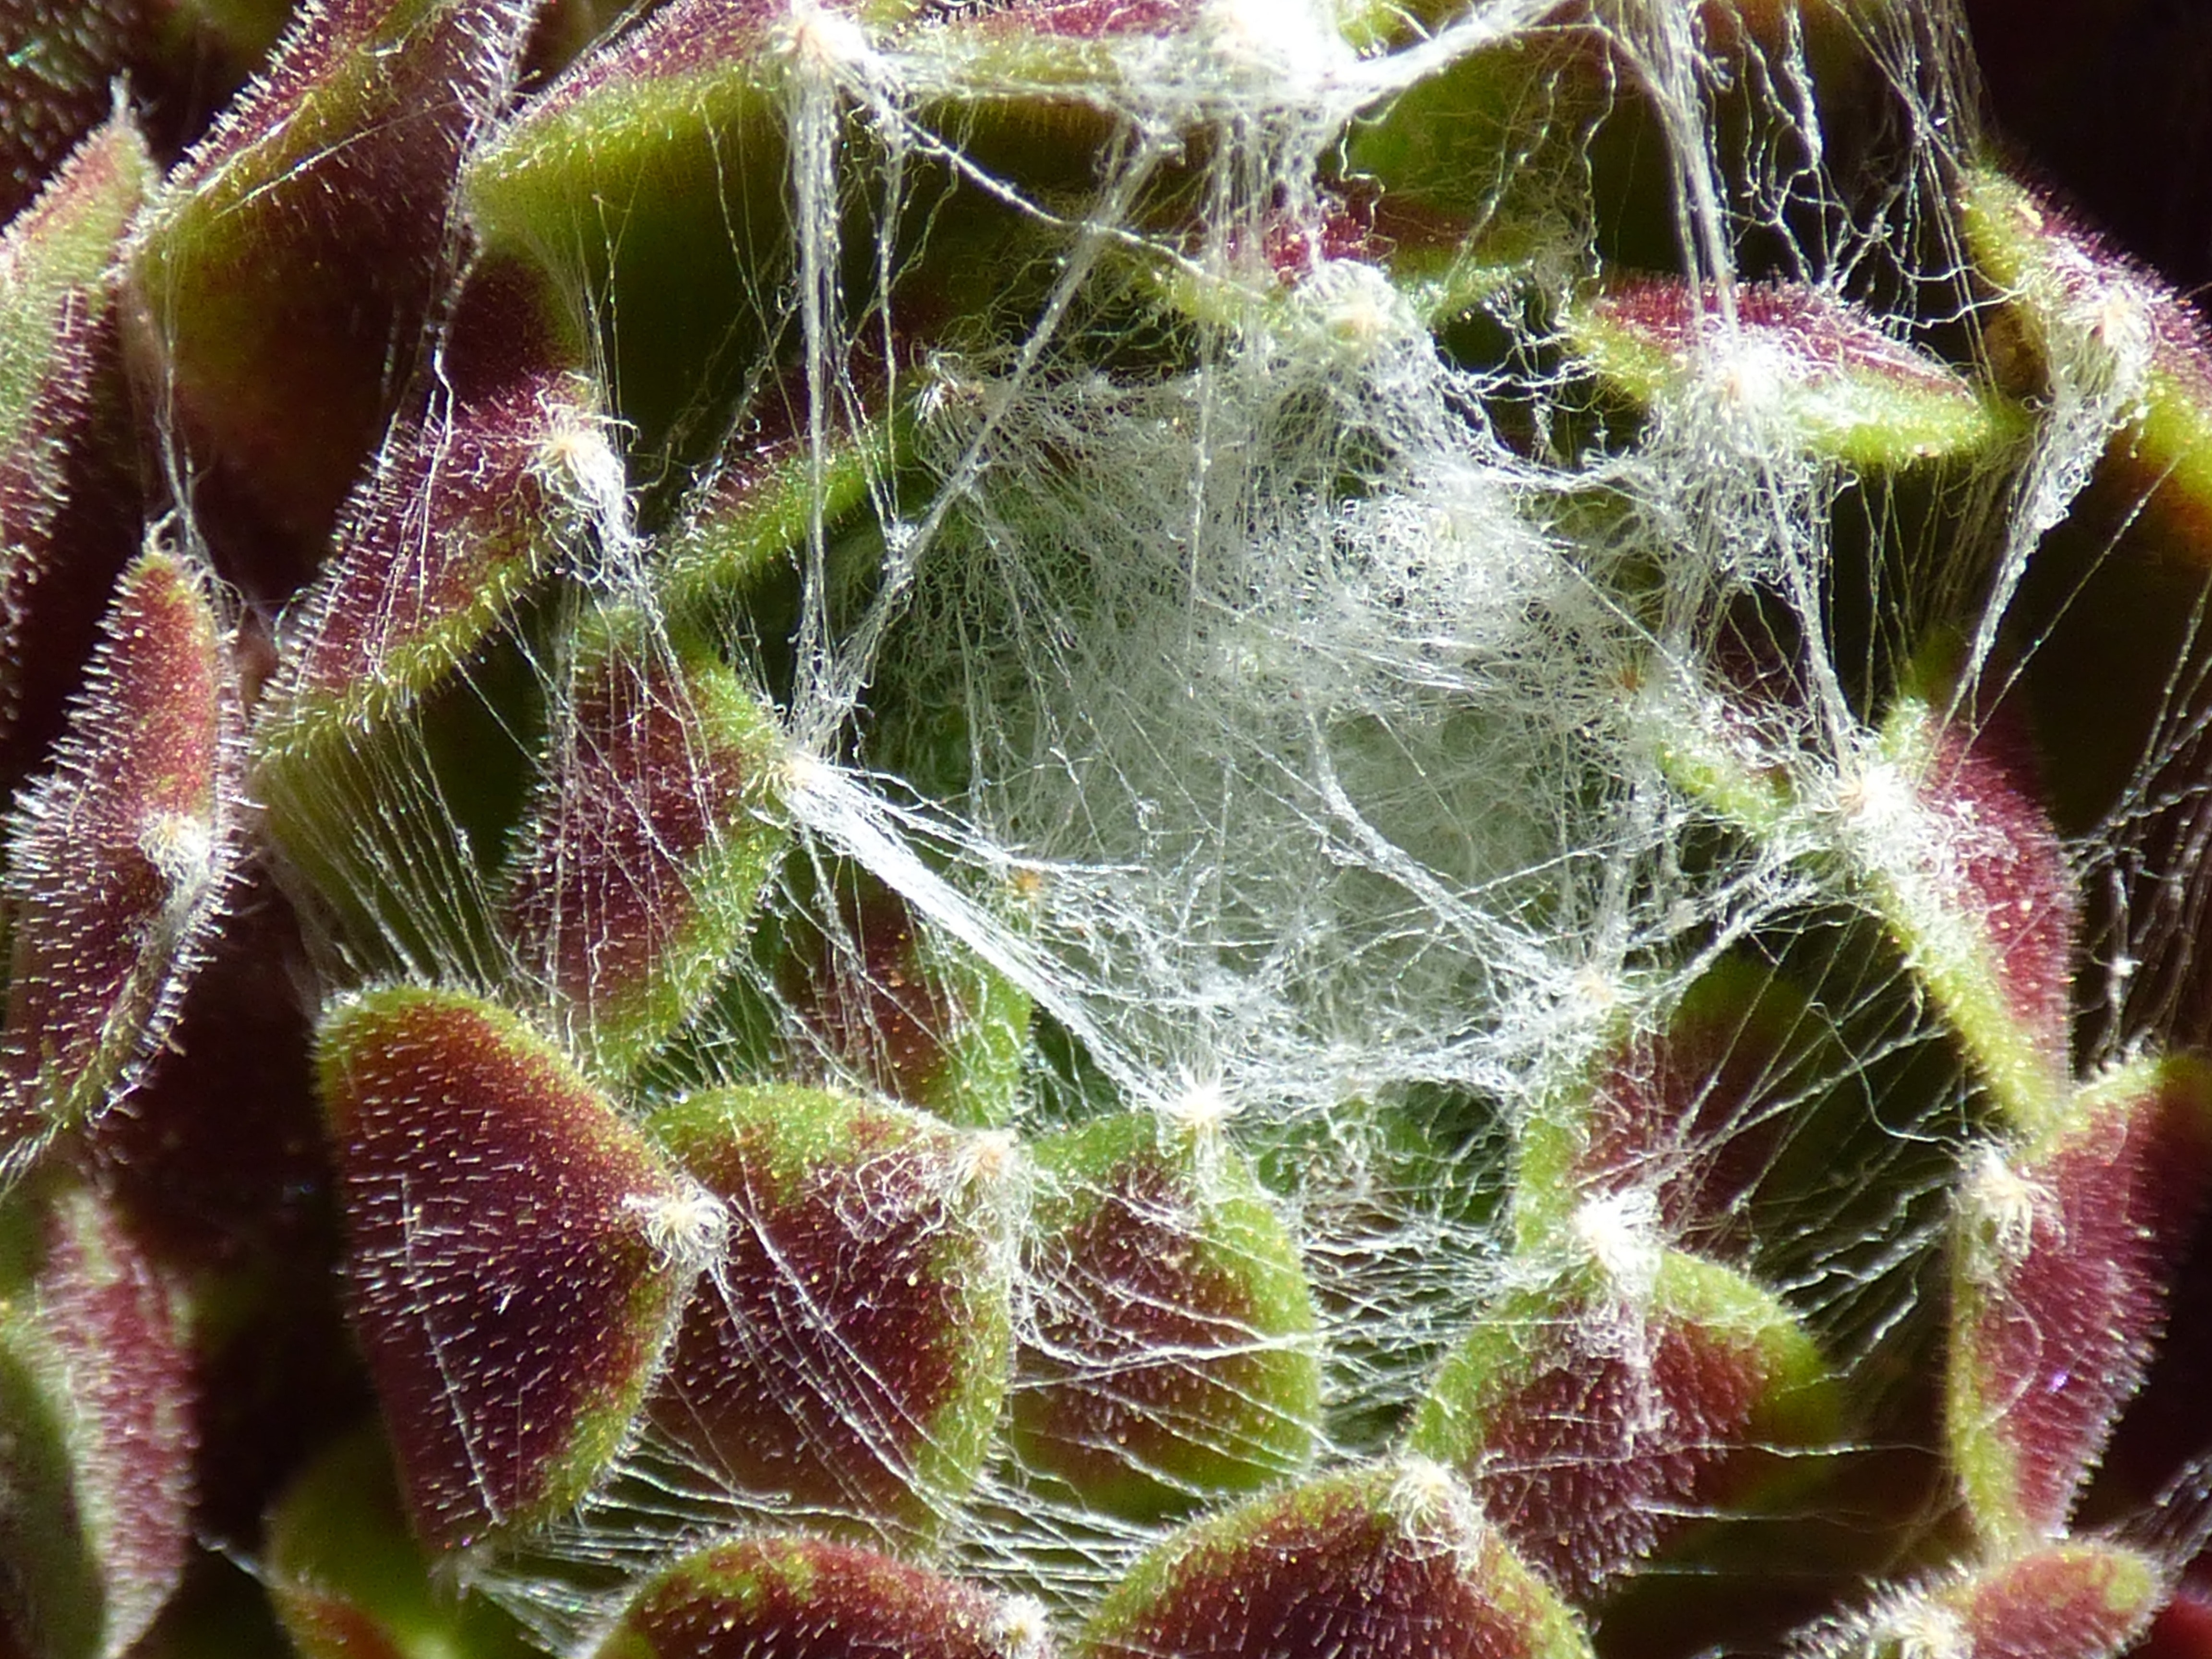 Free stock photo of joubarde spider web, plant, succulent